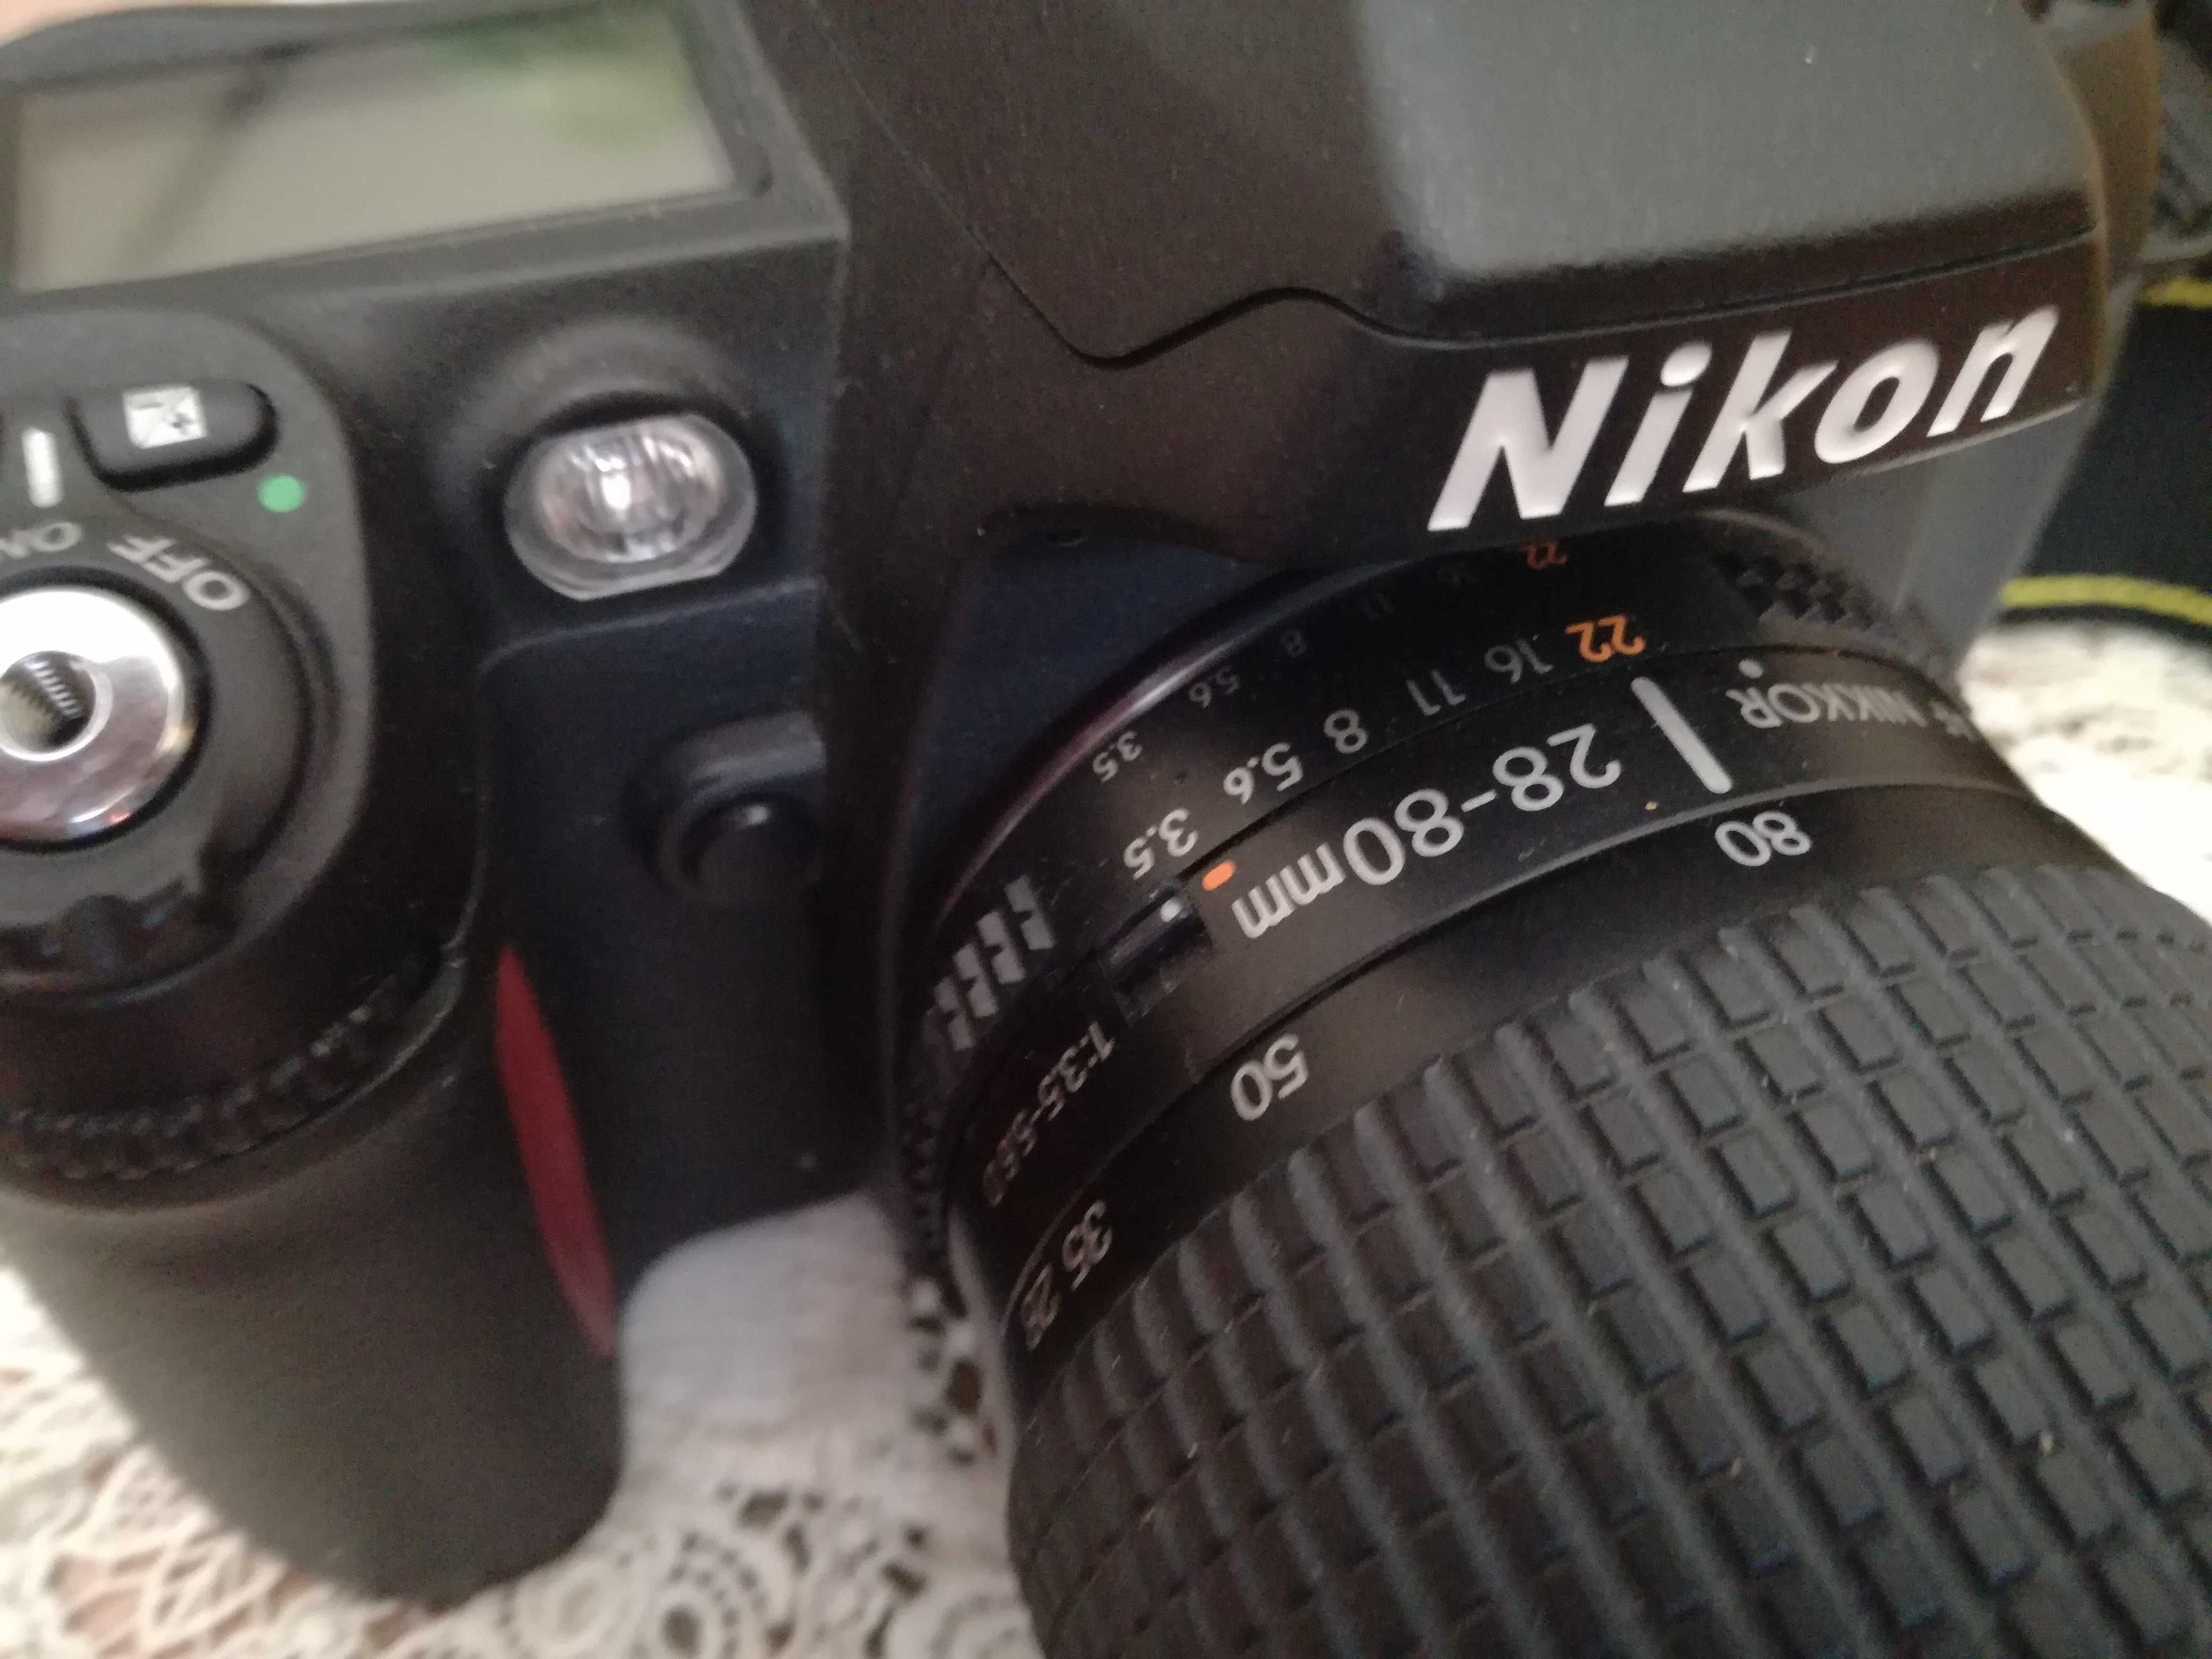 Vendo máquina fotográfica Nikon F80